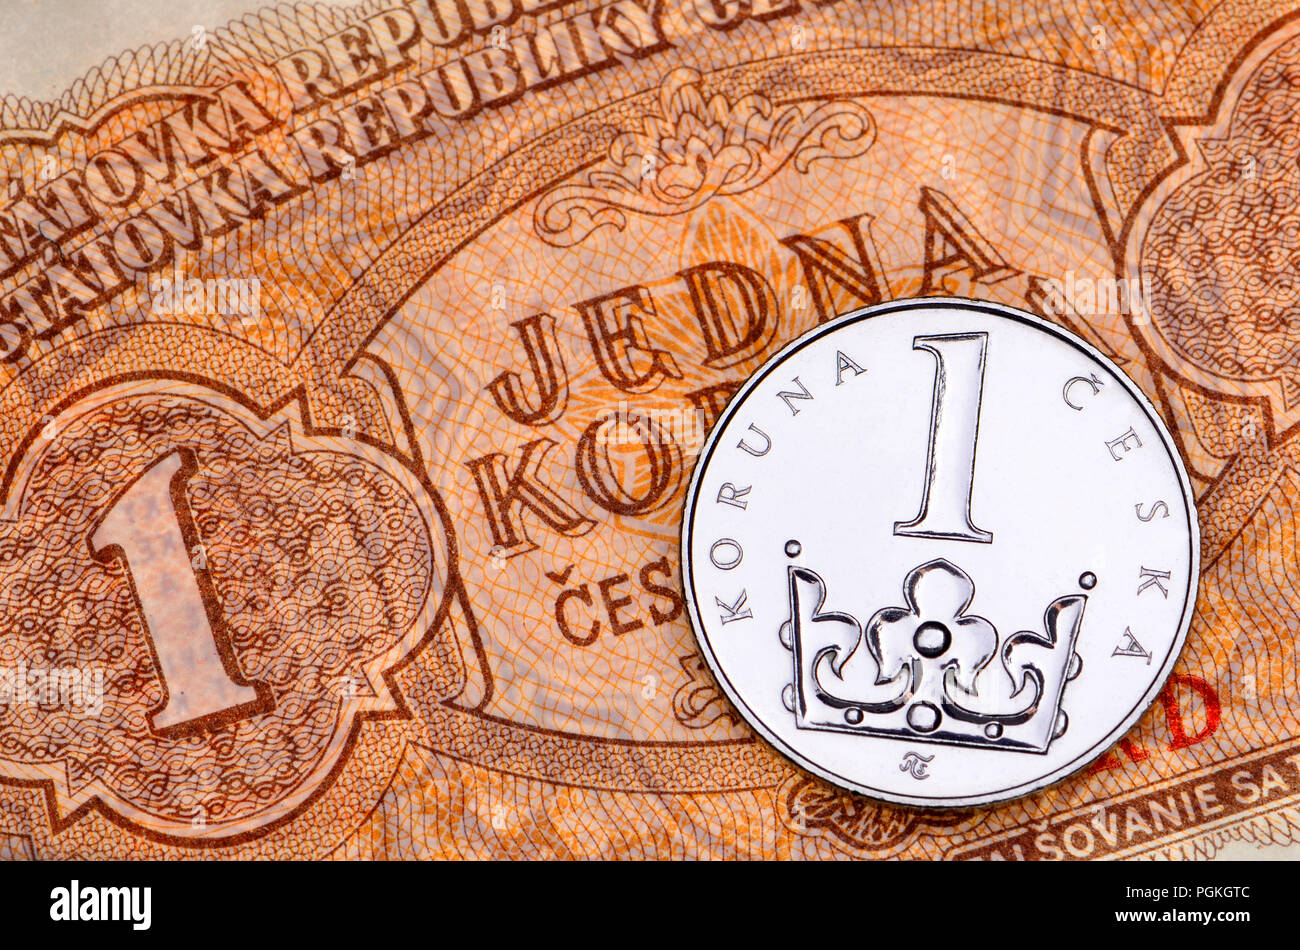 Czech coin and banknote: current 1Kc Czech Republic coin on a 1953 Czechoslovakia 1 Korun banknote Stock Photo